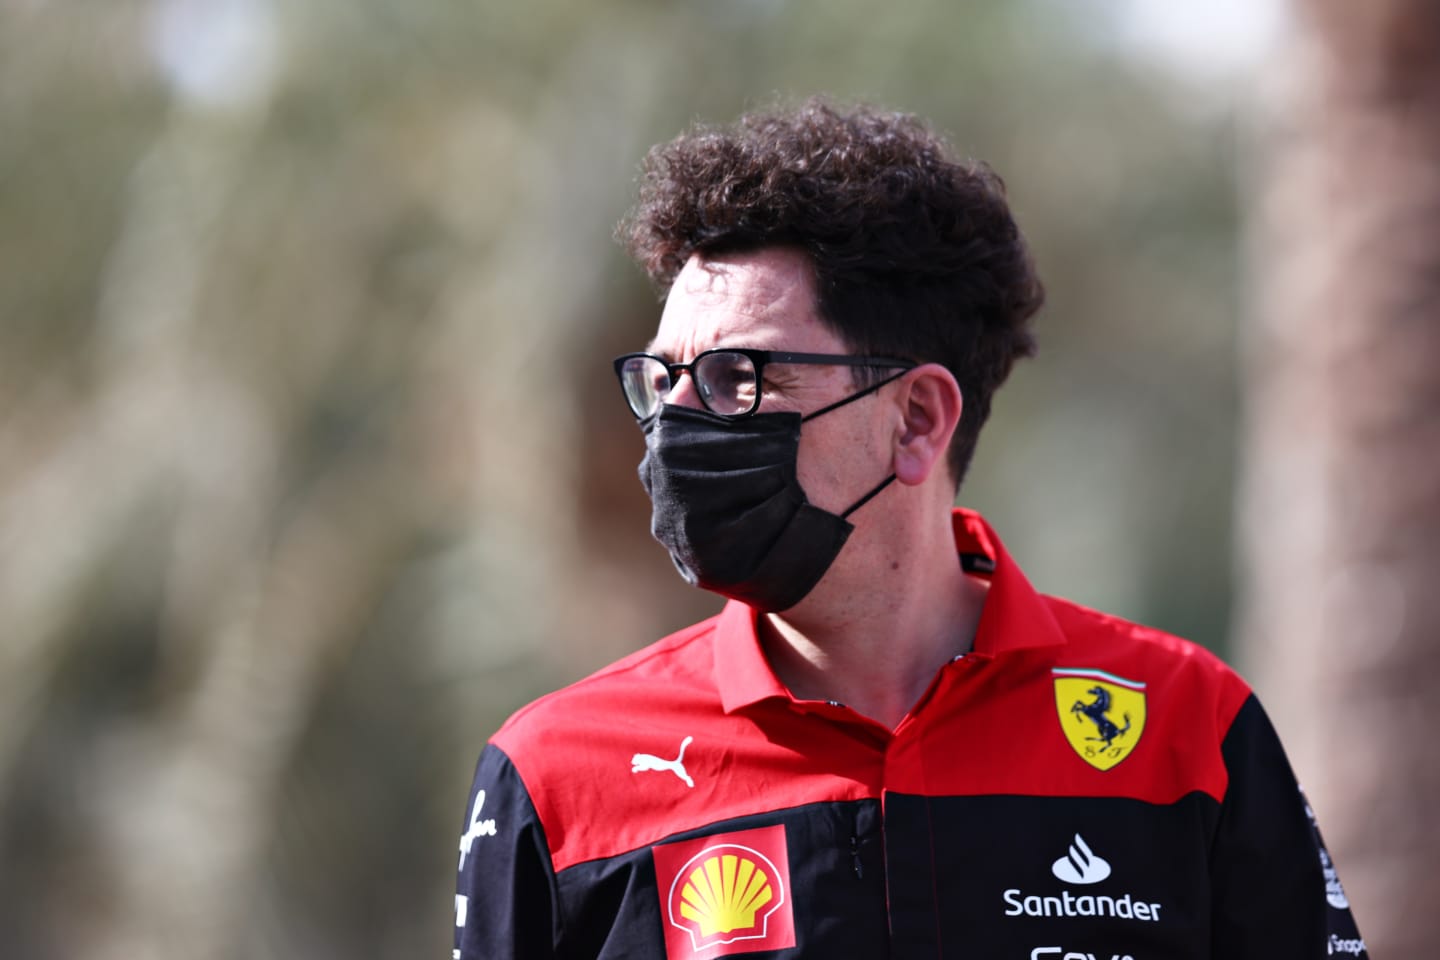 BAHRAIN, BAHRAIN - MARCH 11: Scuderia Ferrari Team Principal Mattia Binotto walks in the Paddock during Day Two of F1 Testing at Bahrain International Circuit on March 11, 2022 in Bahrain, Bahrain. (Photo by Lars Baron/Getty Images)